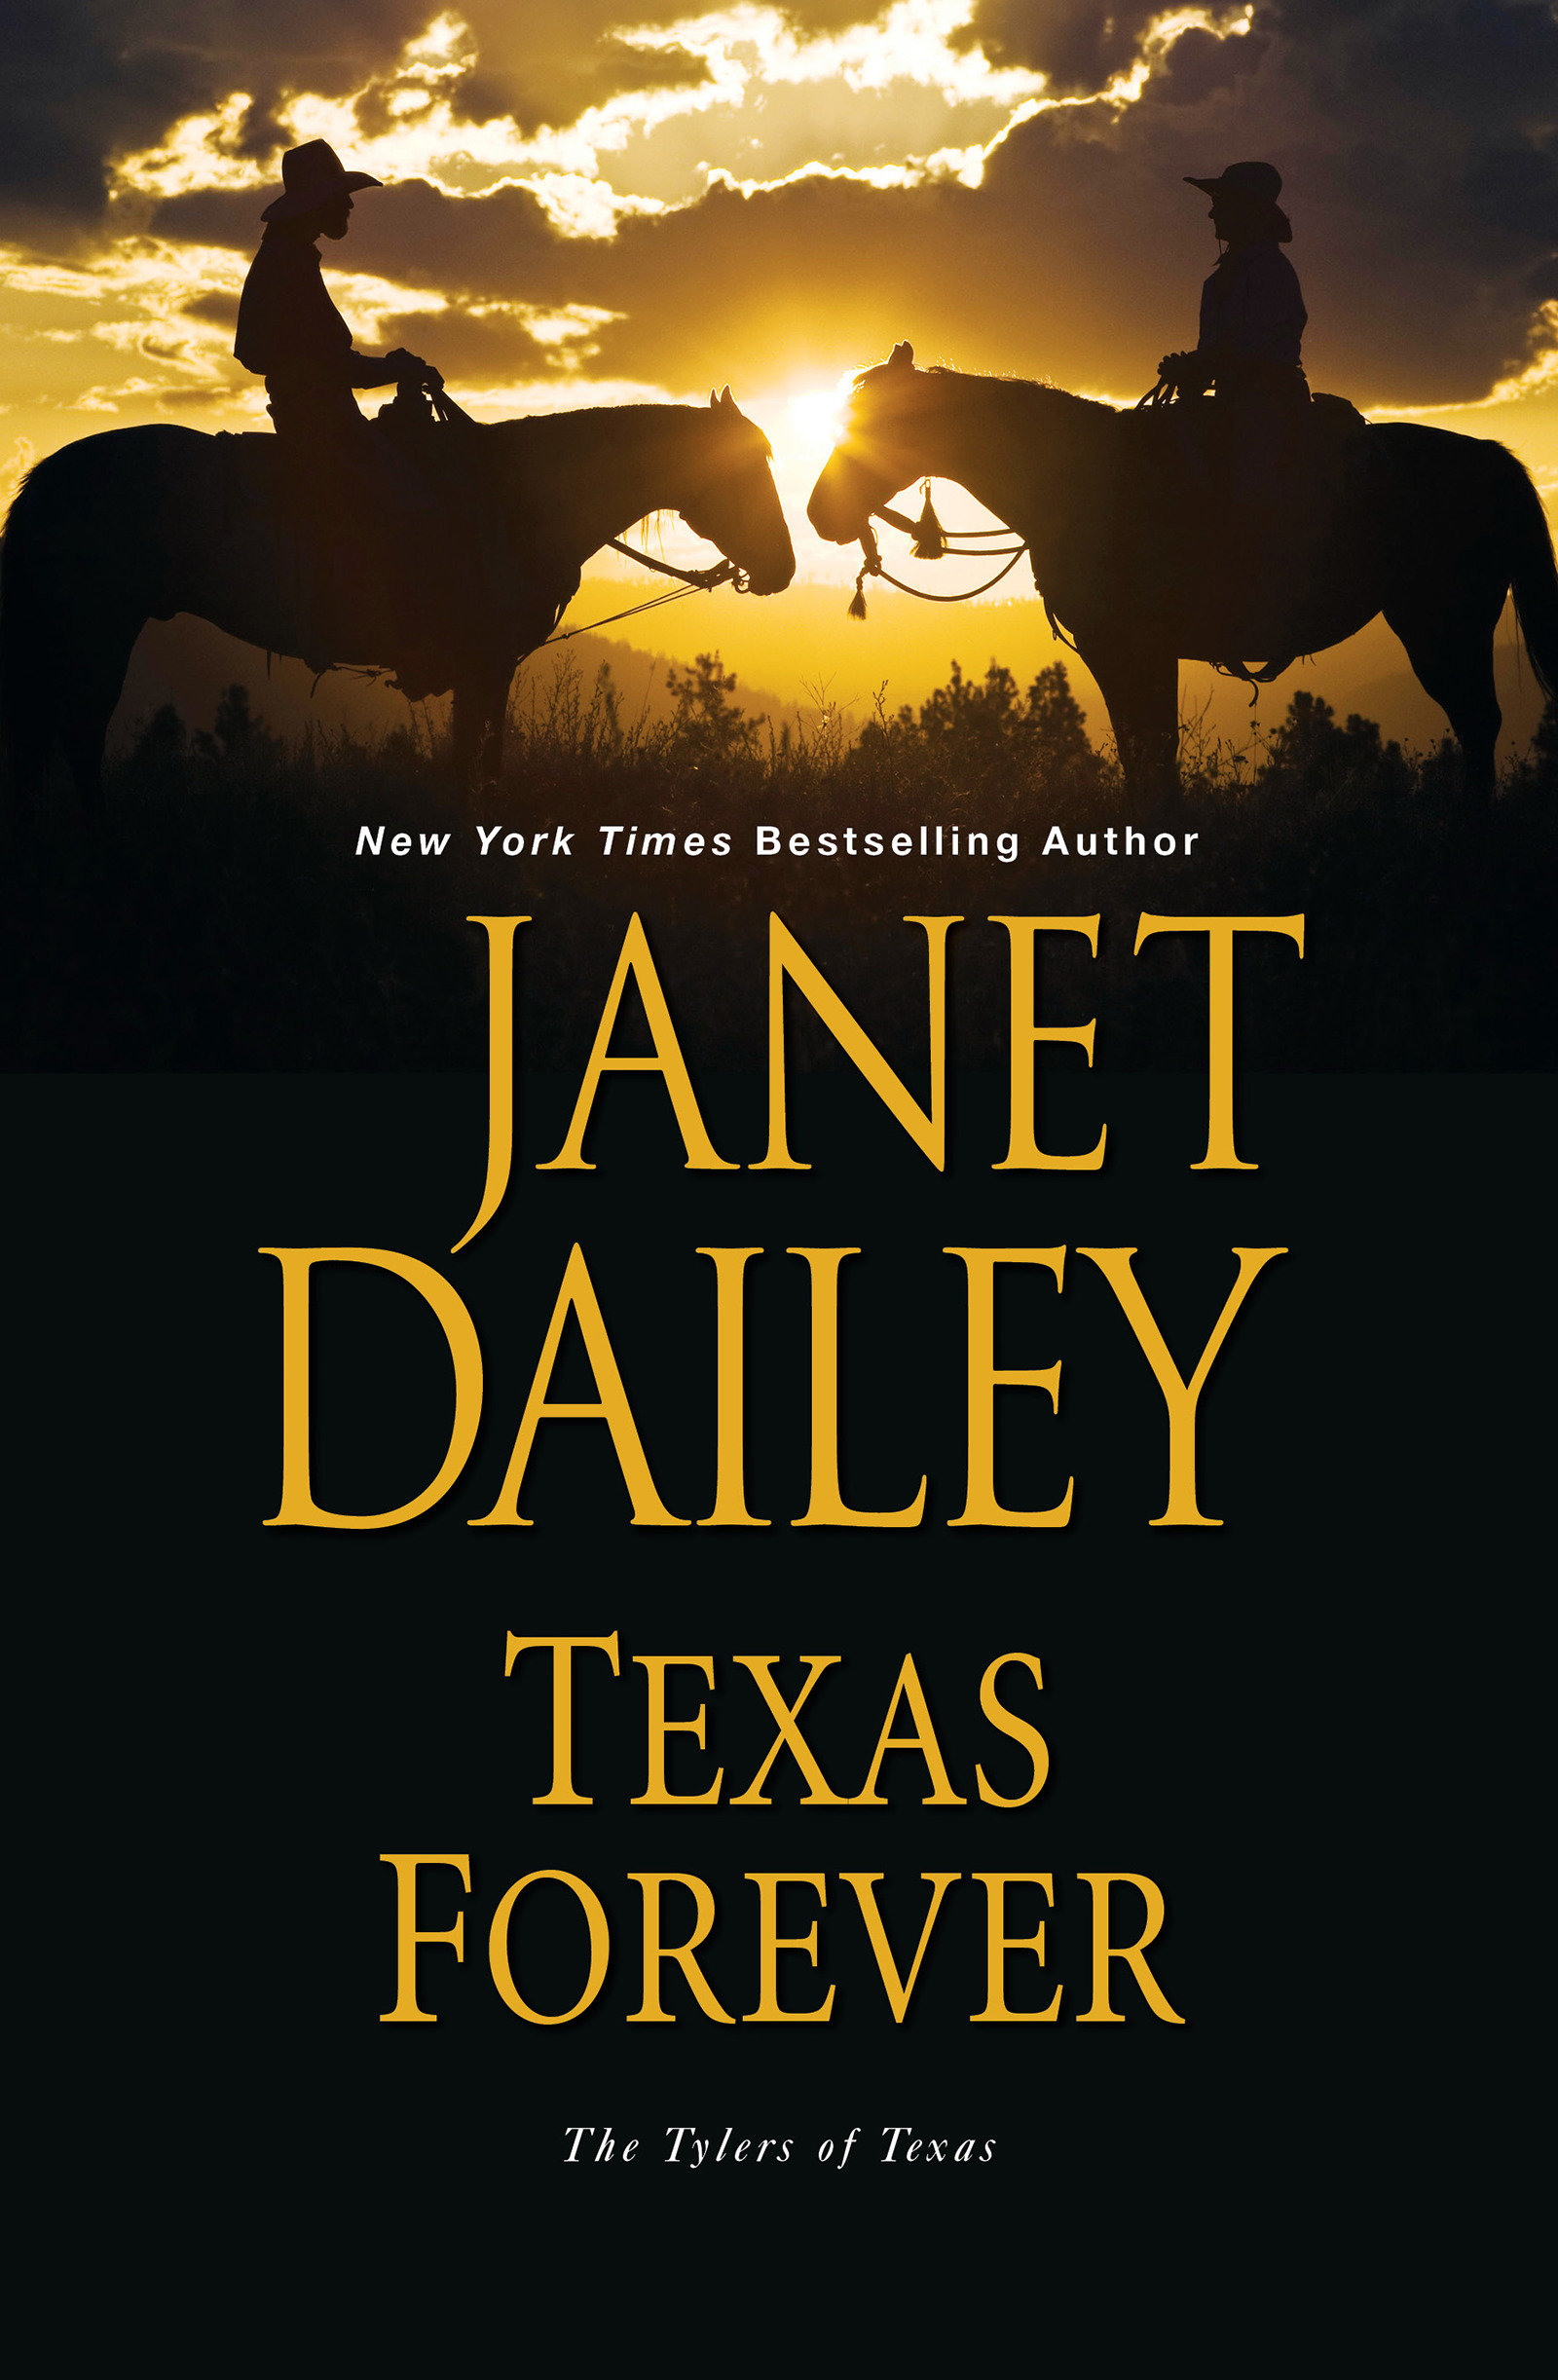 Texas Forever (Hardcover Book)